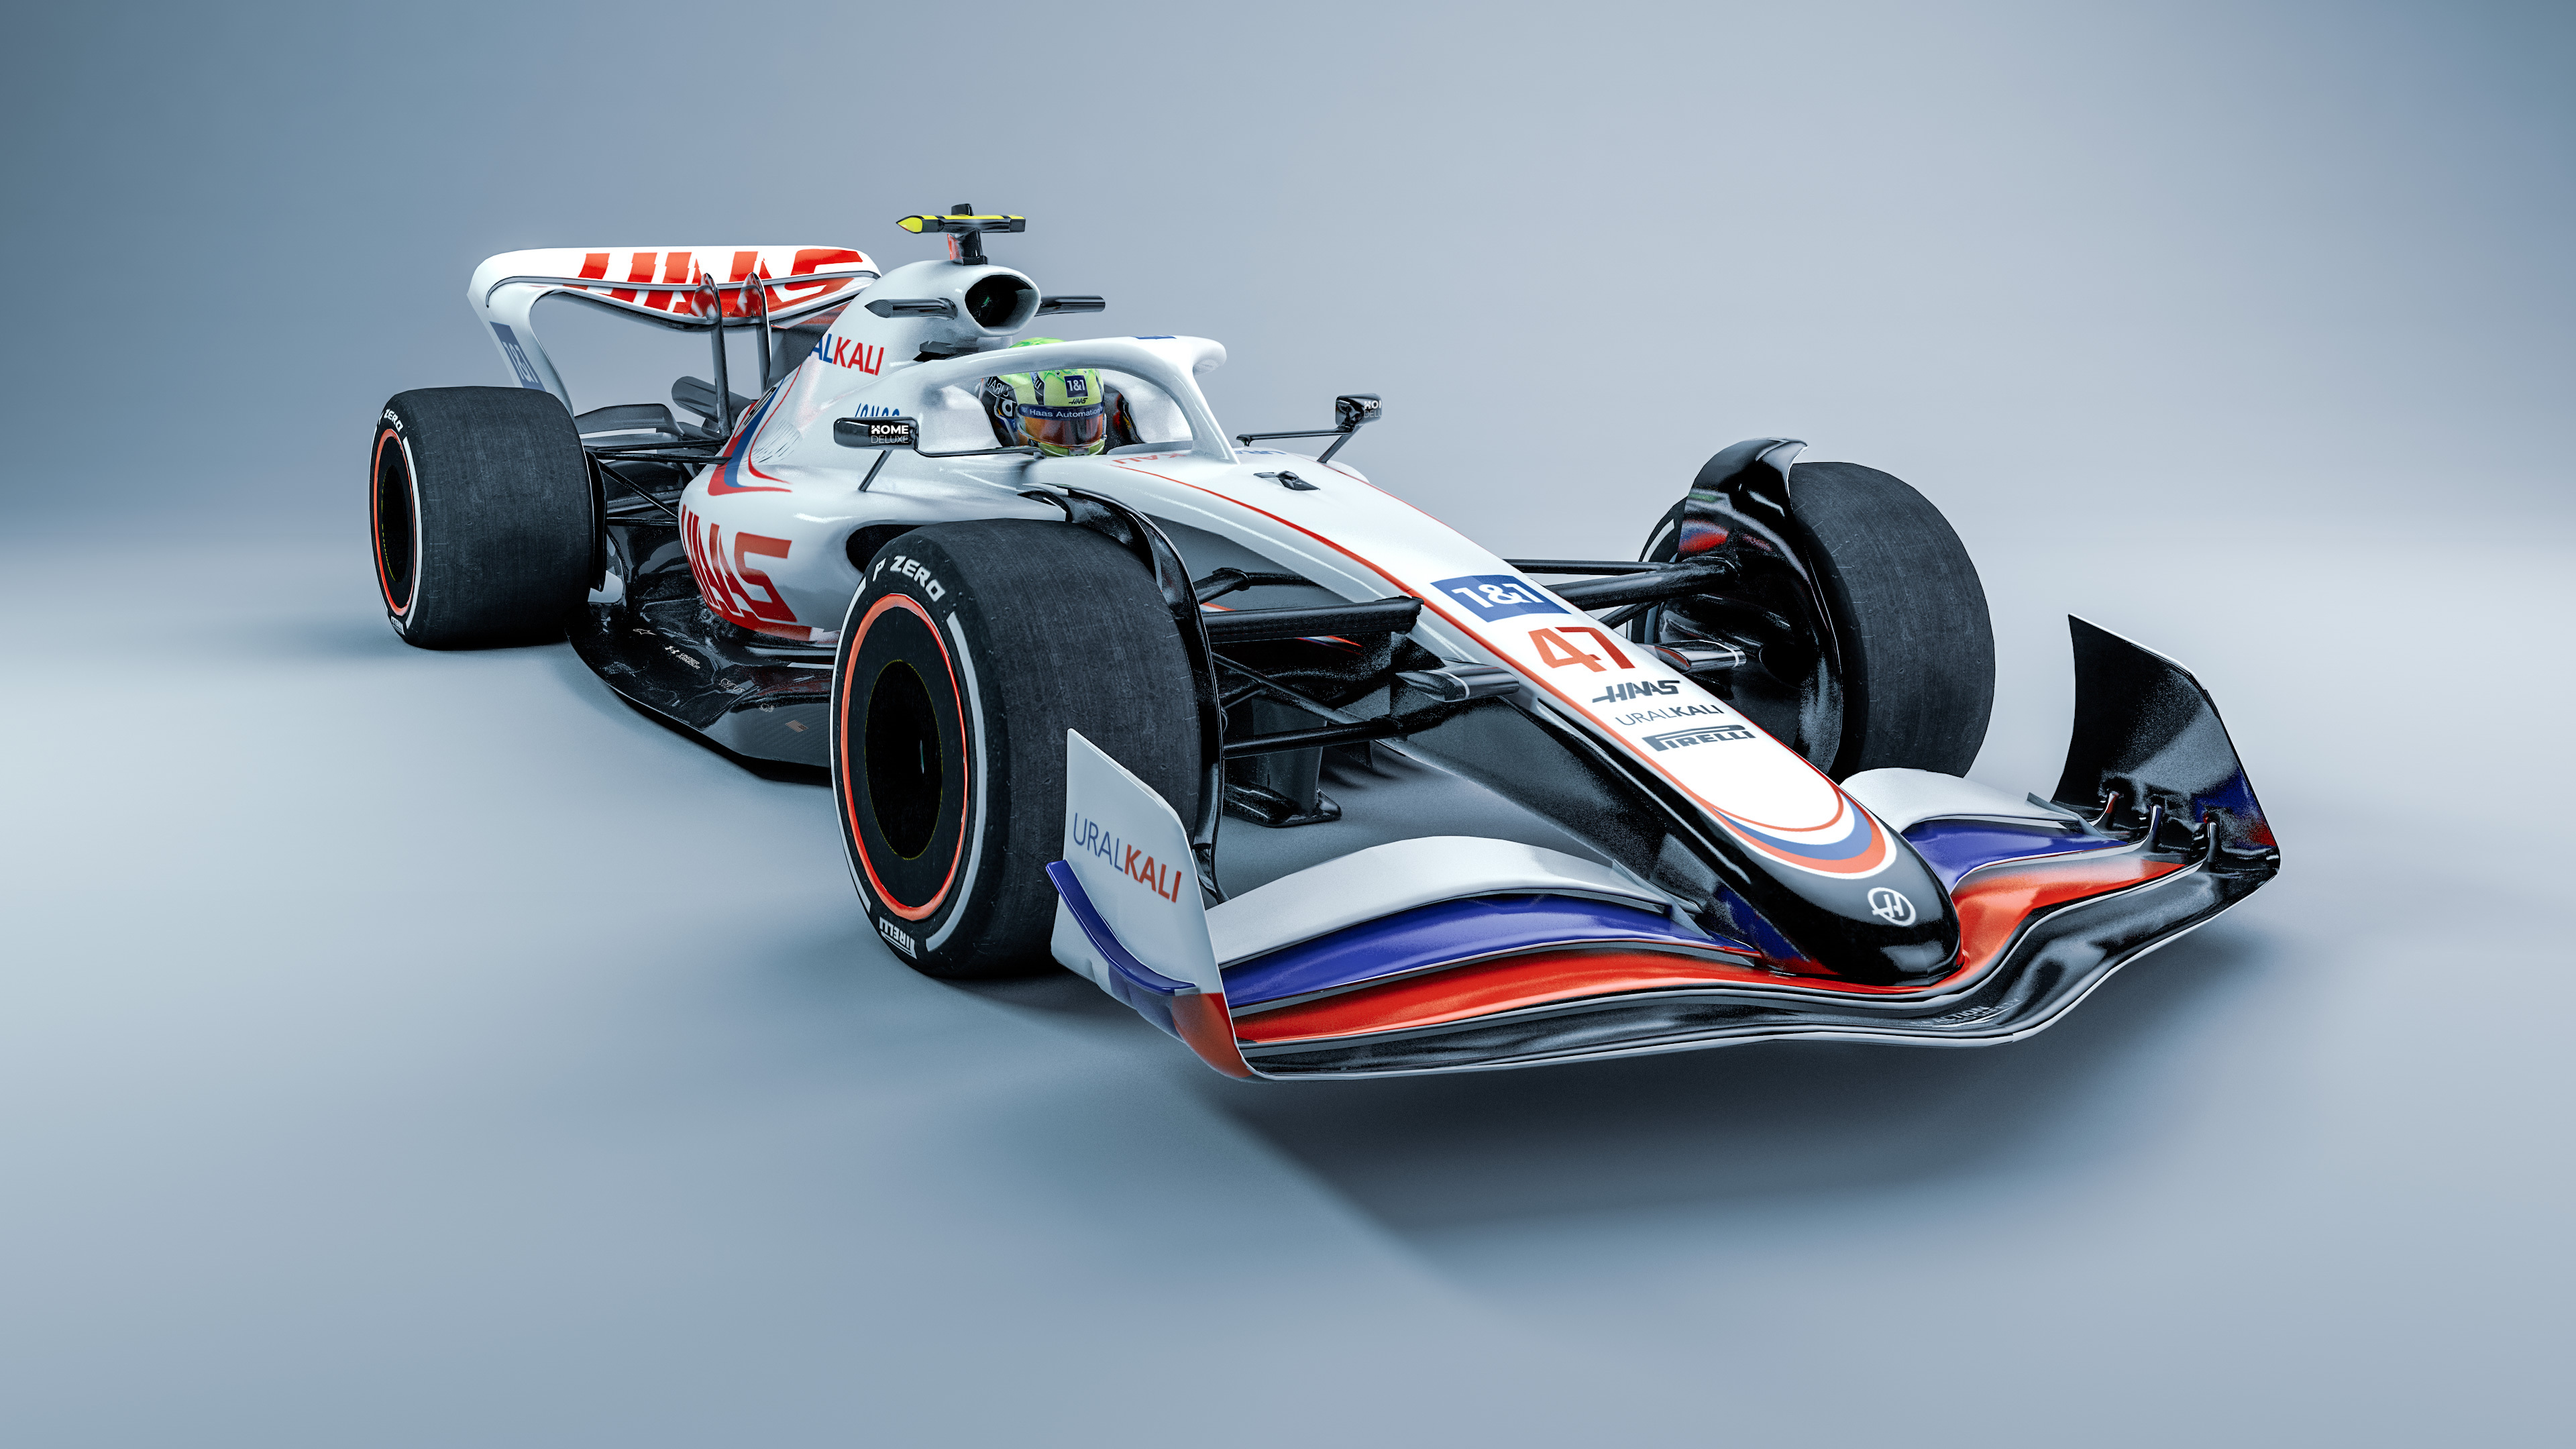 Team Haas Car